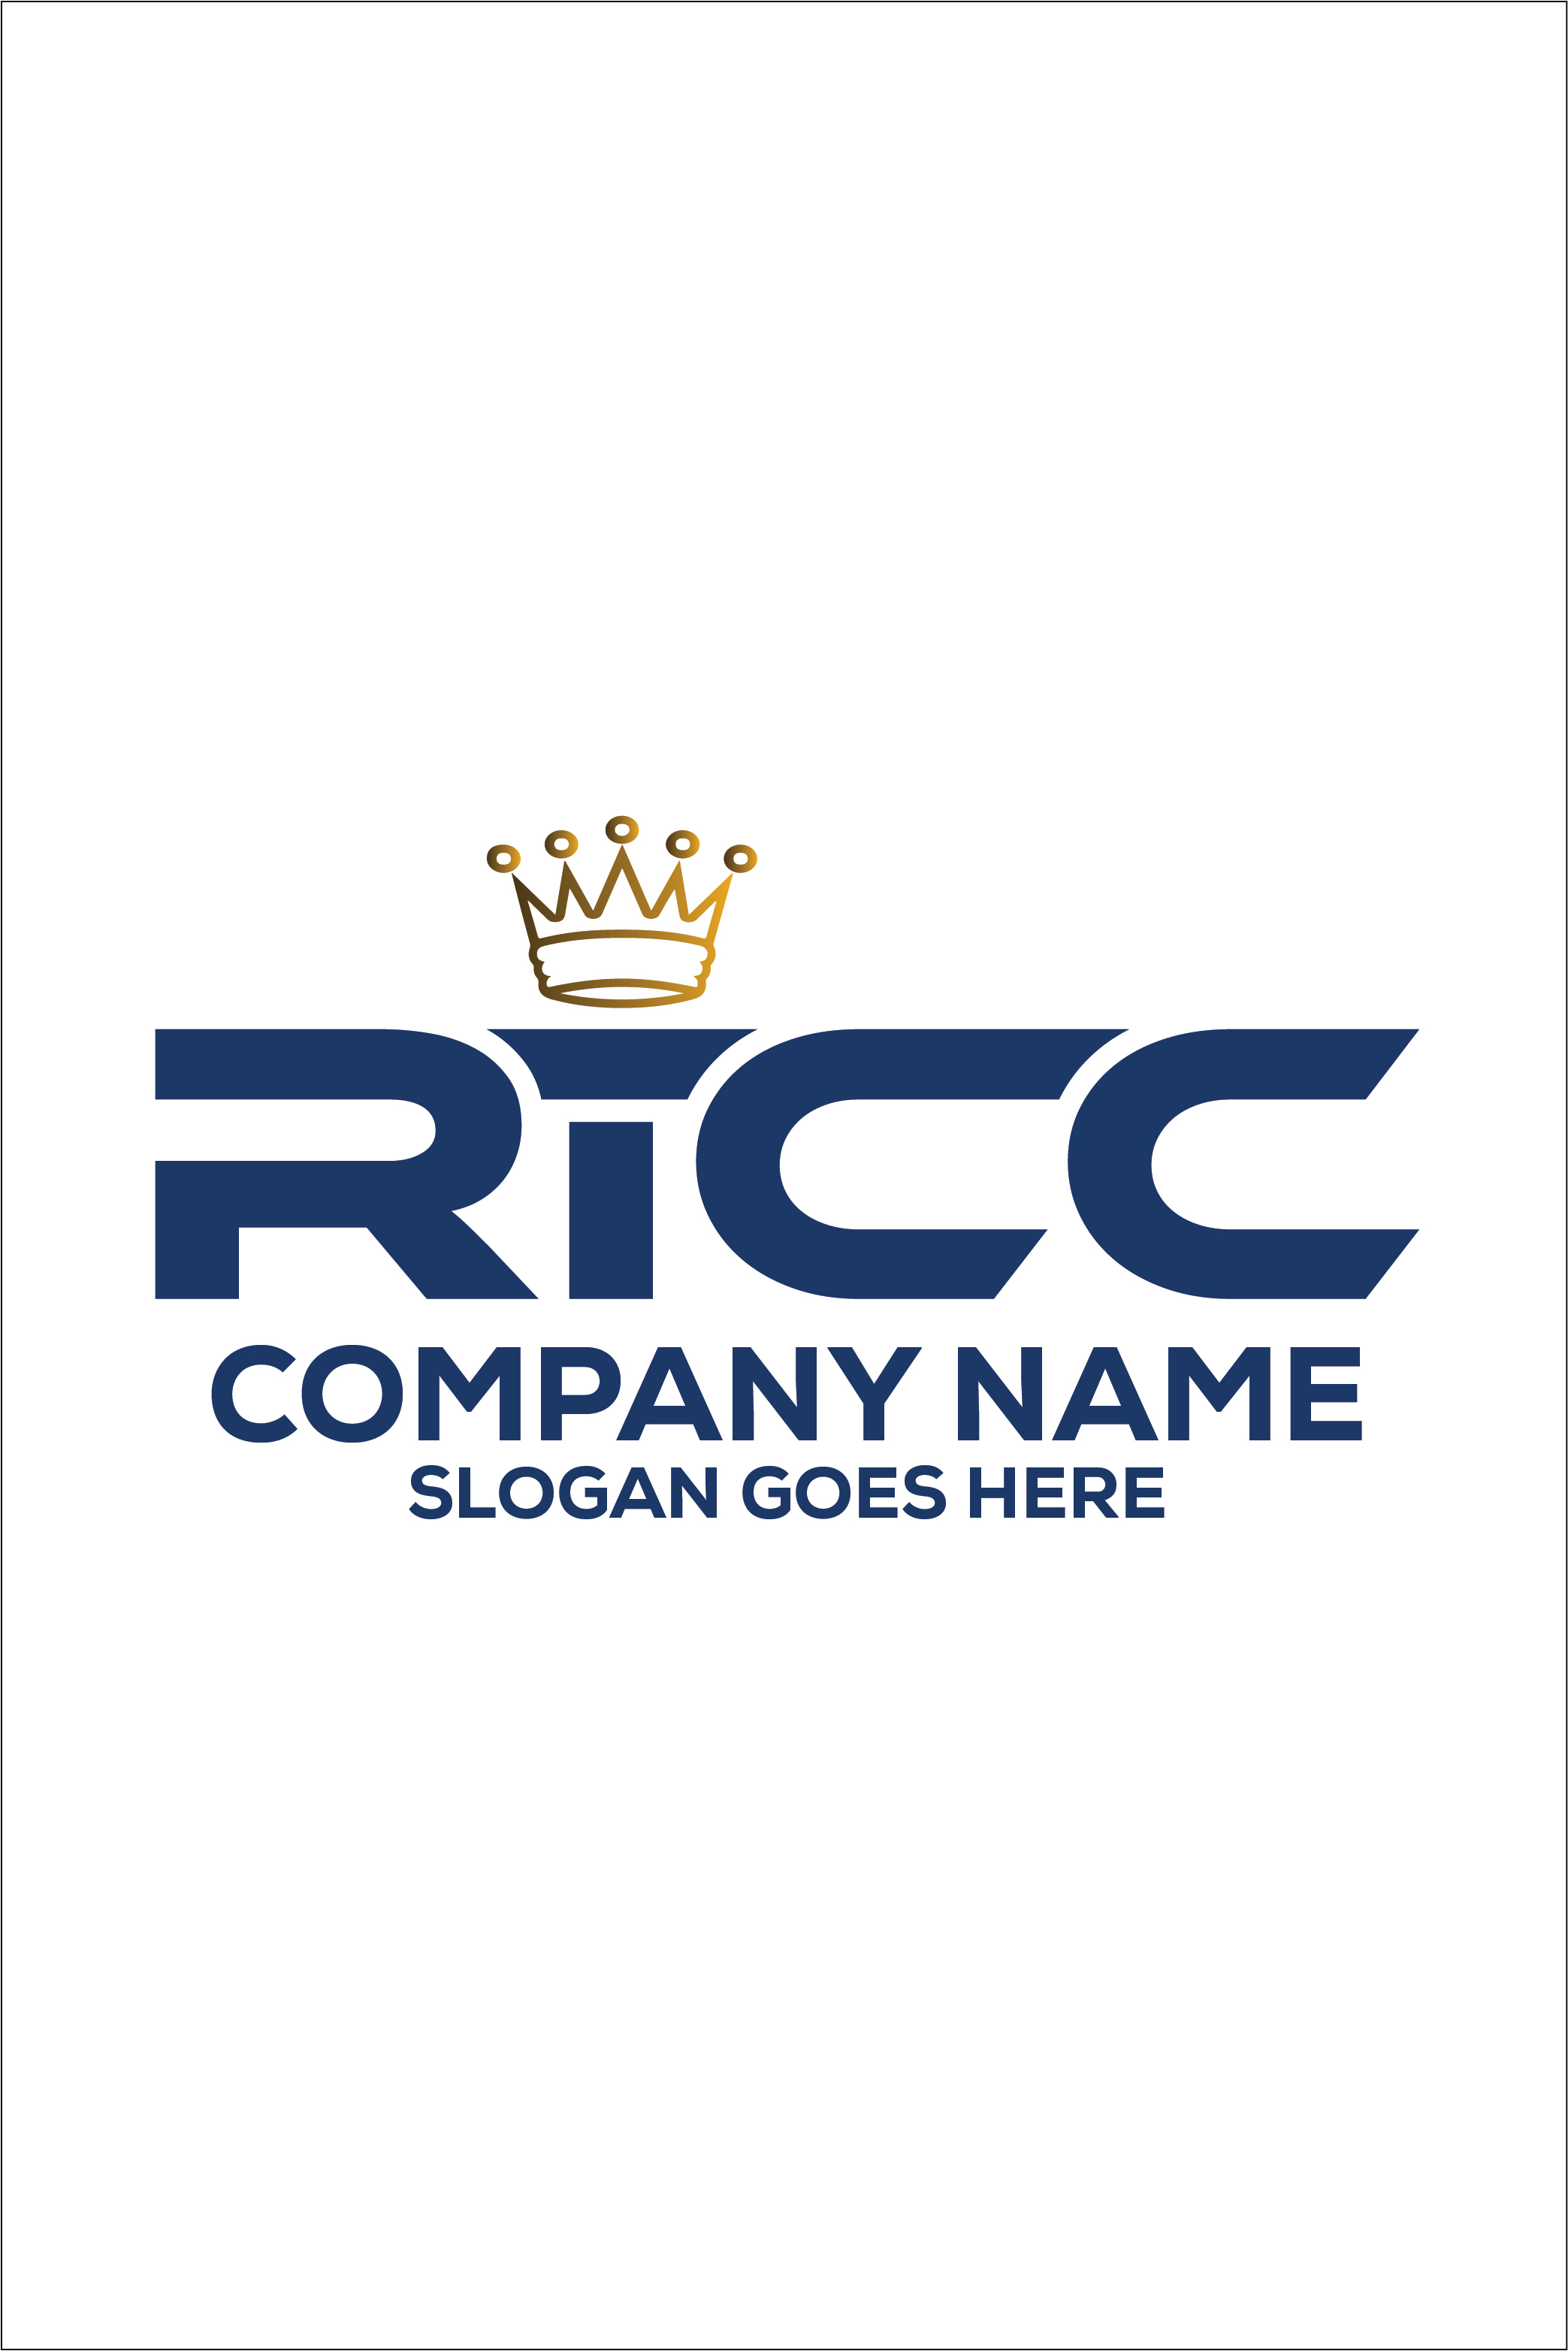 Letter RTCC Logo Design Vector Image Template pinterest preview image.